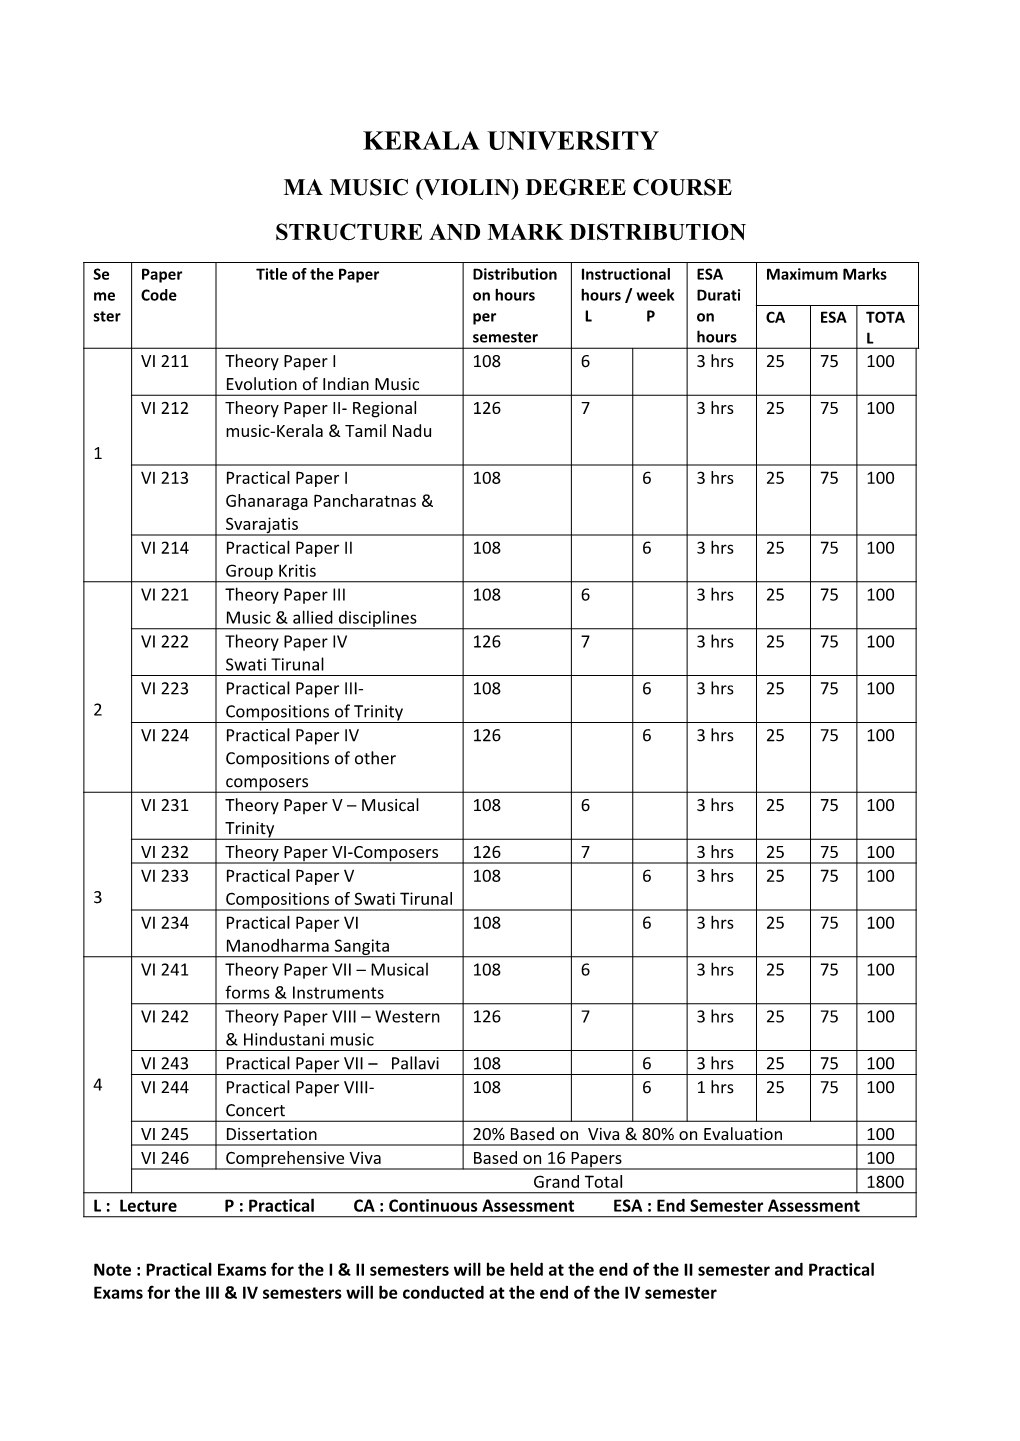 Kerala University Ma Music (Violin) Degree Course Structure and Mark Distribution